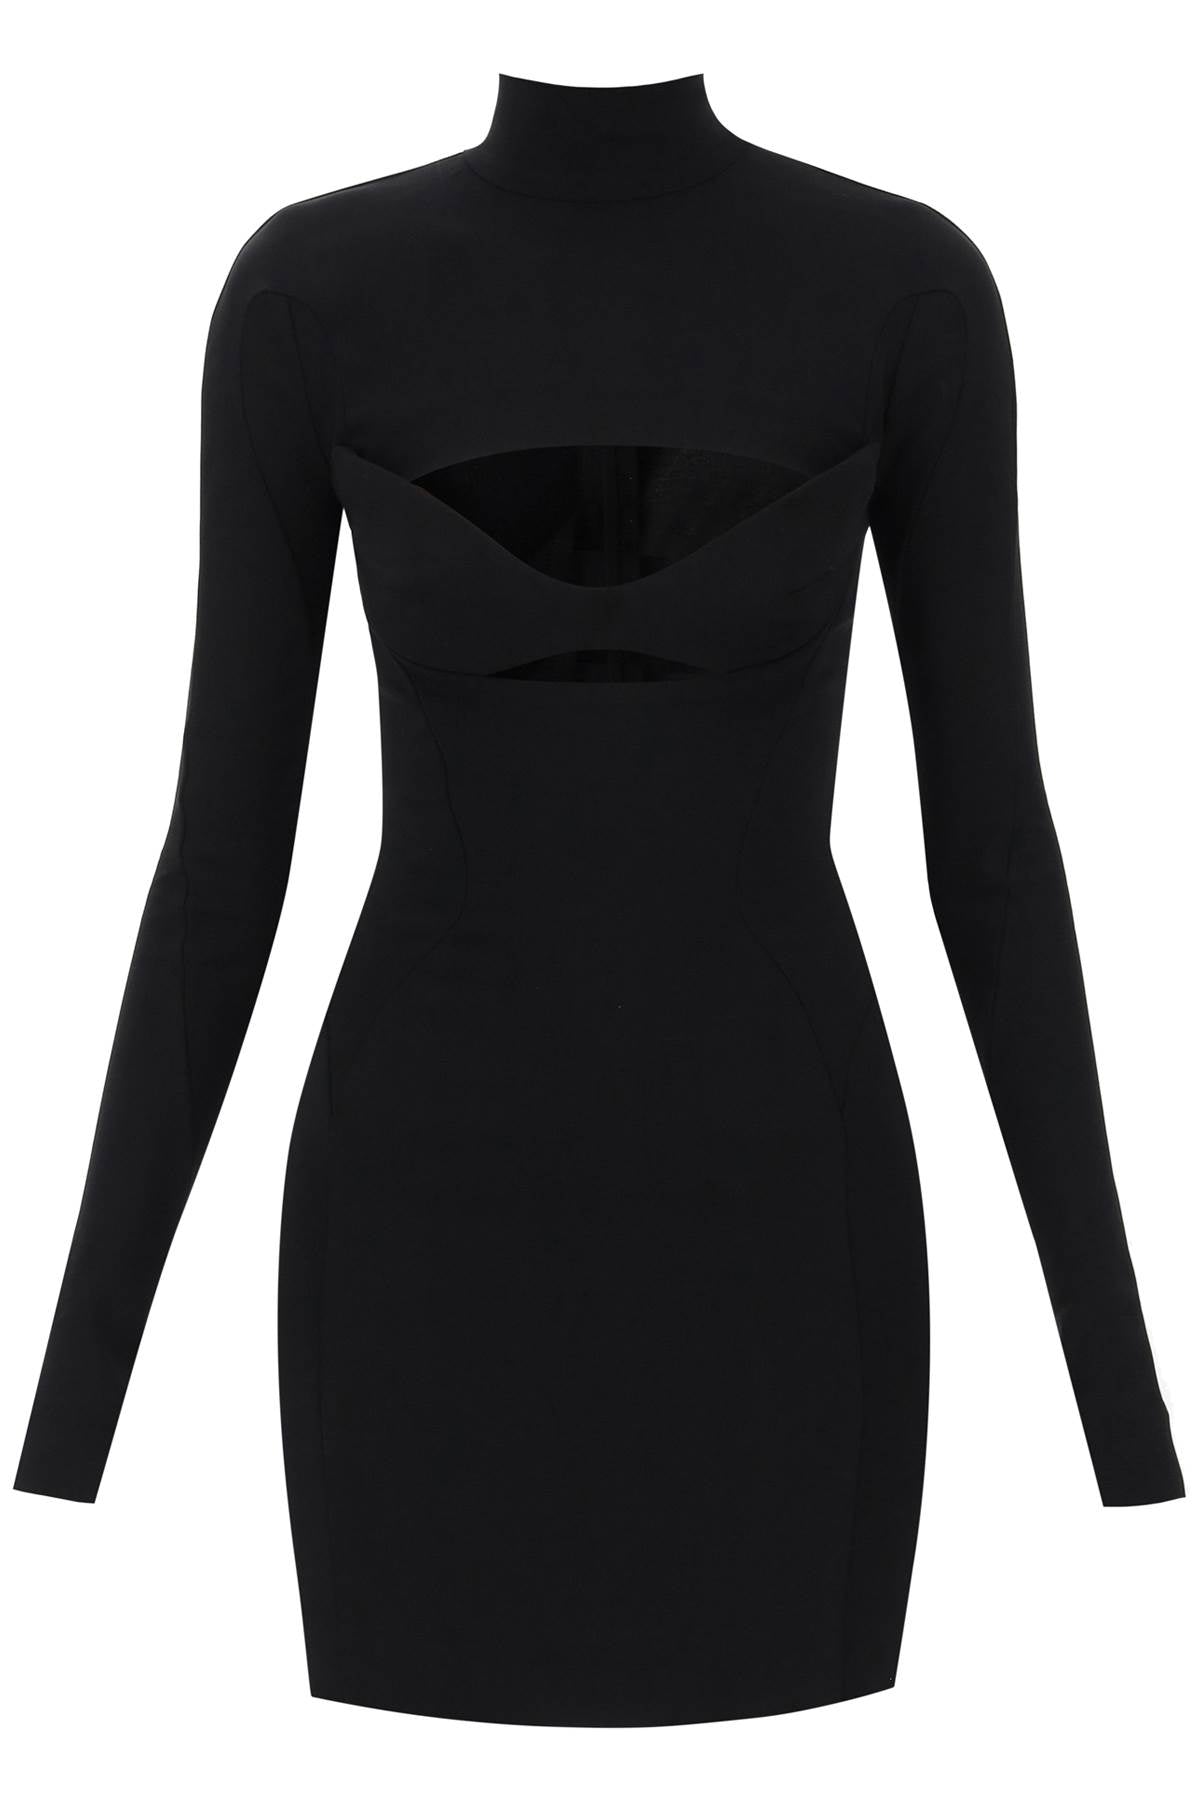 Sleek and Chic Black Cut-Out Mini Dress by MUGLER